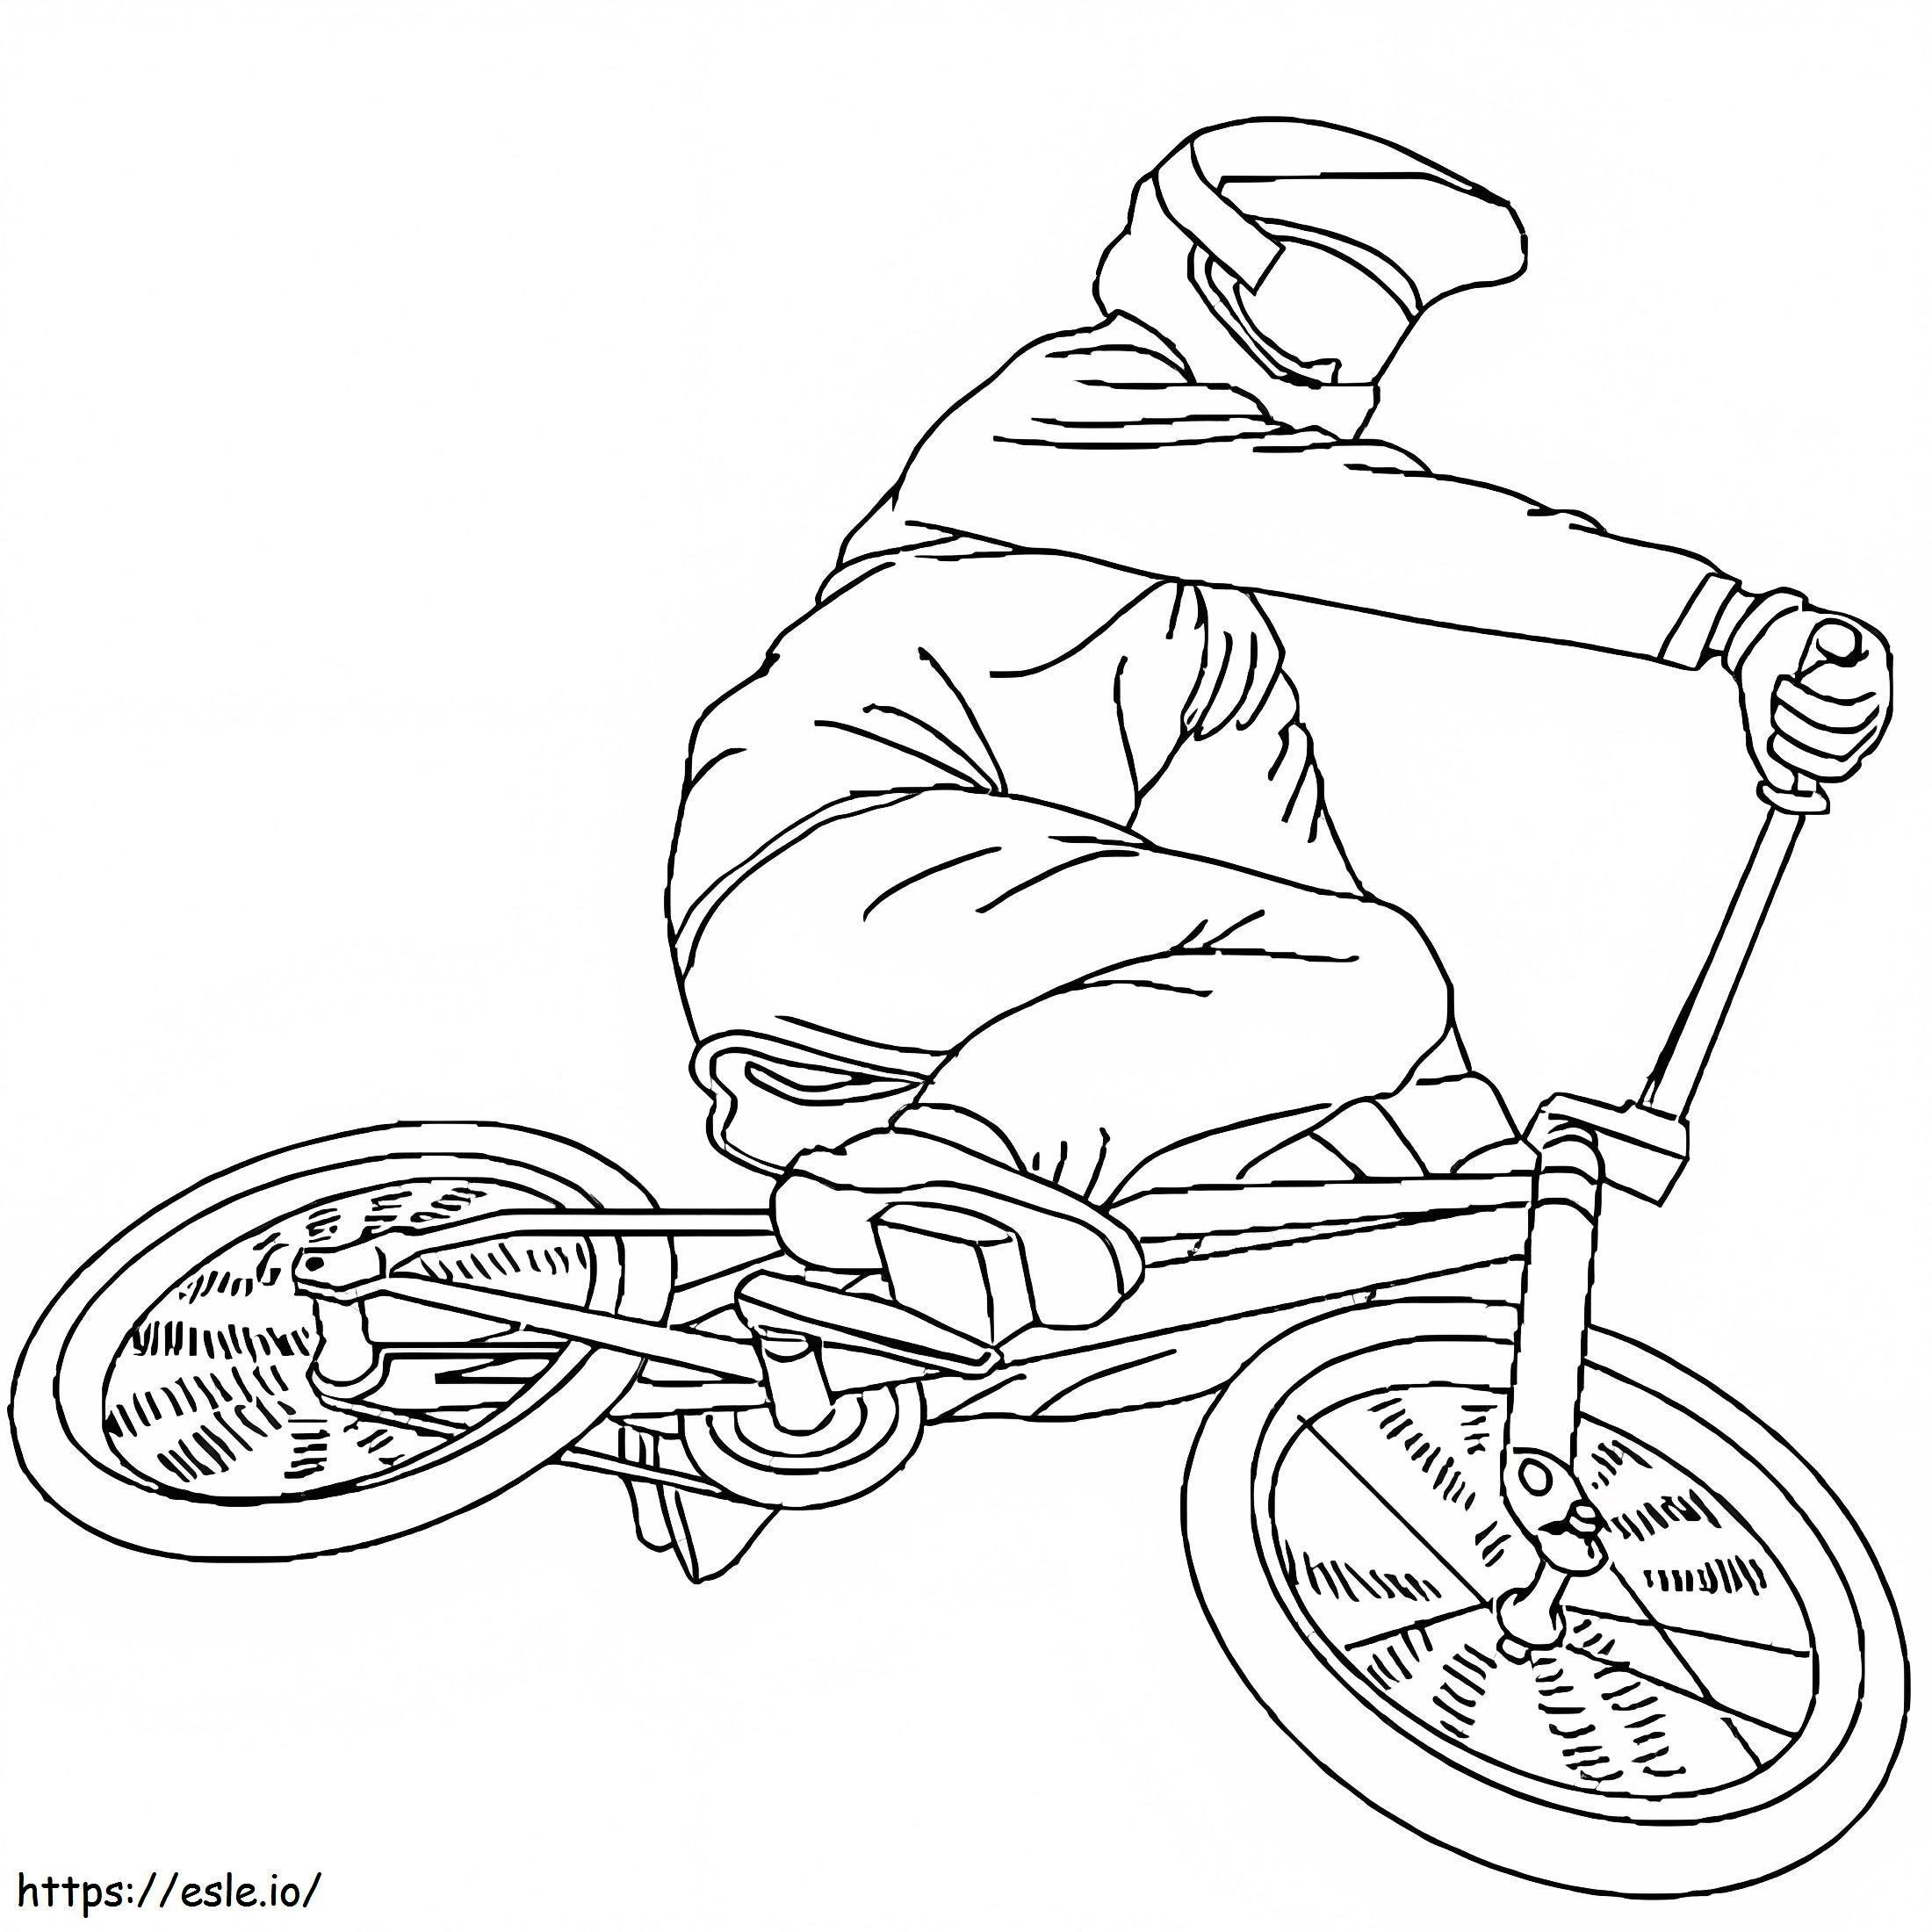 Bicicletta BMX da colorare